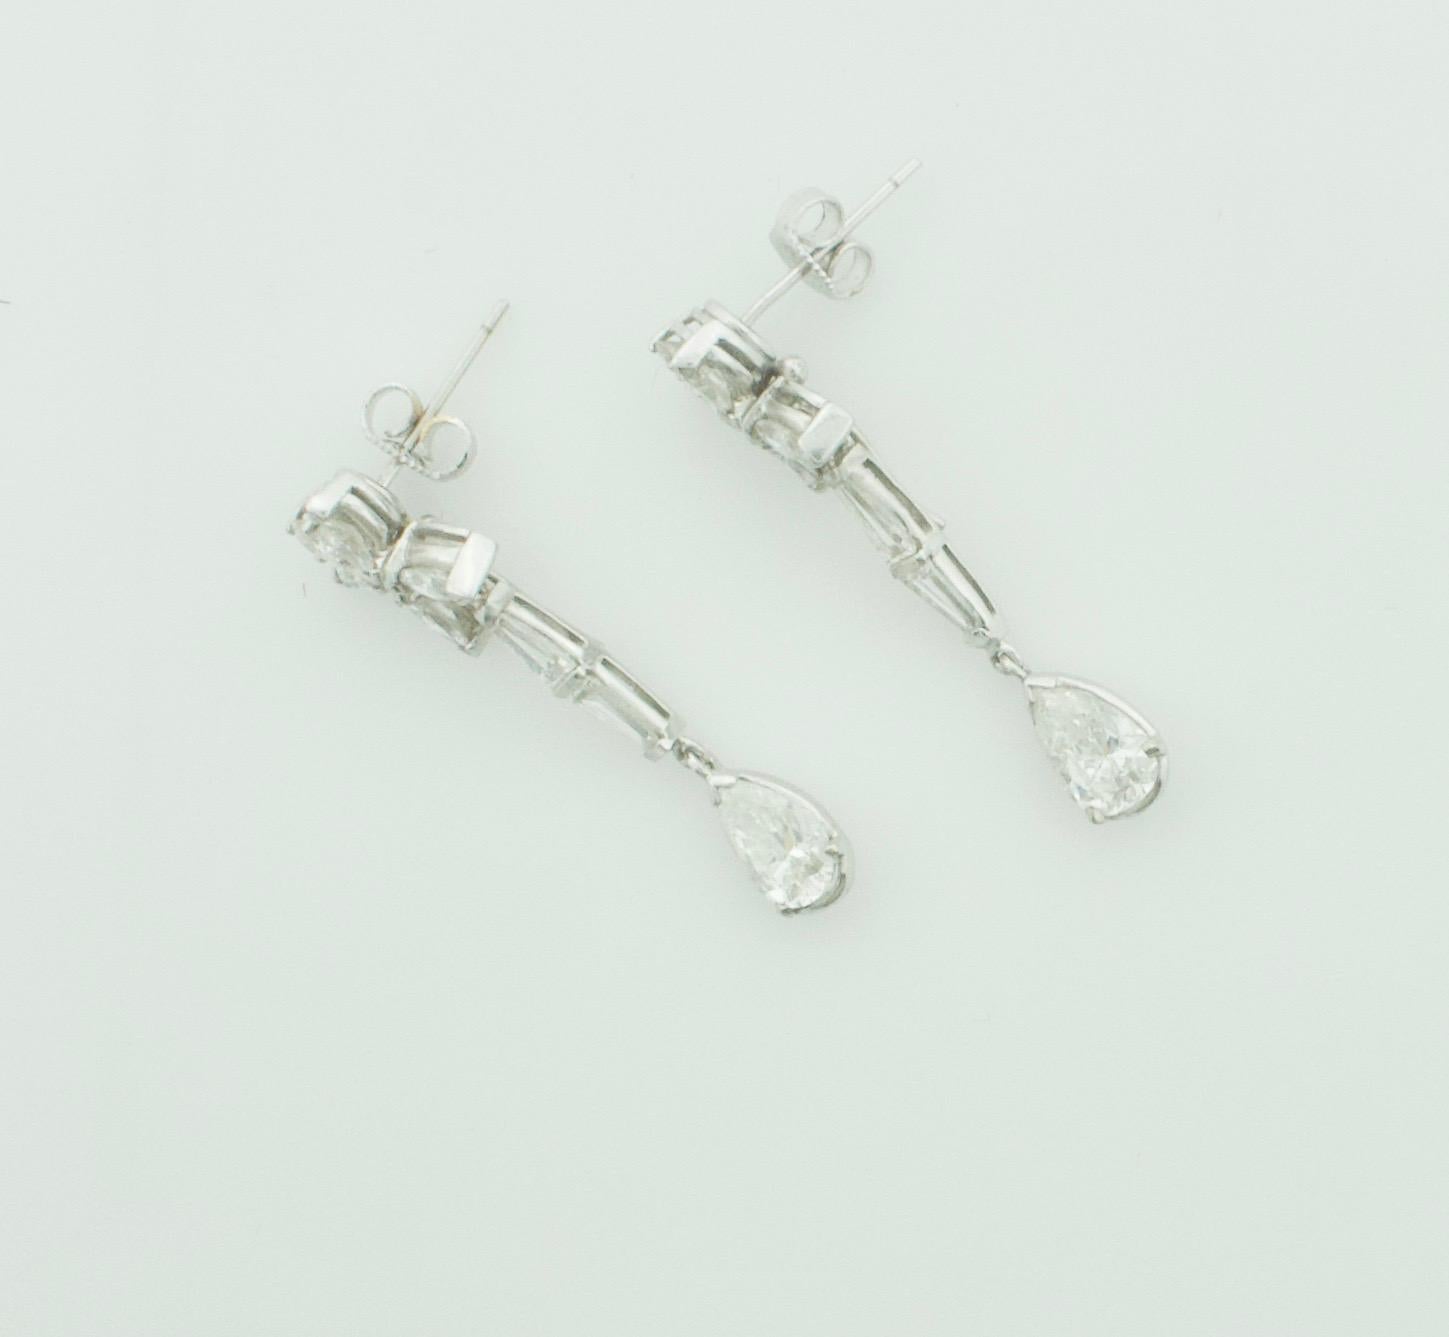 diamond shaped earrings hanging